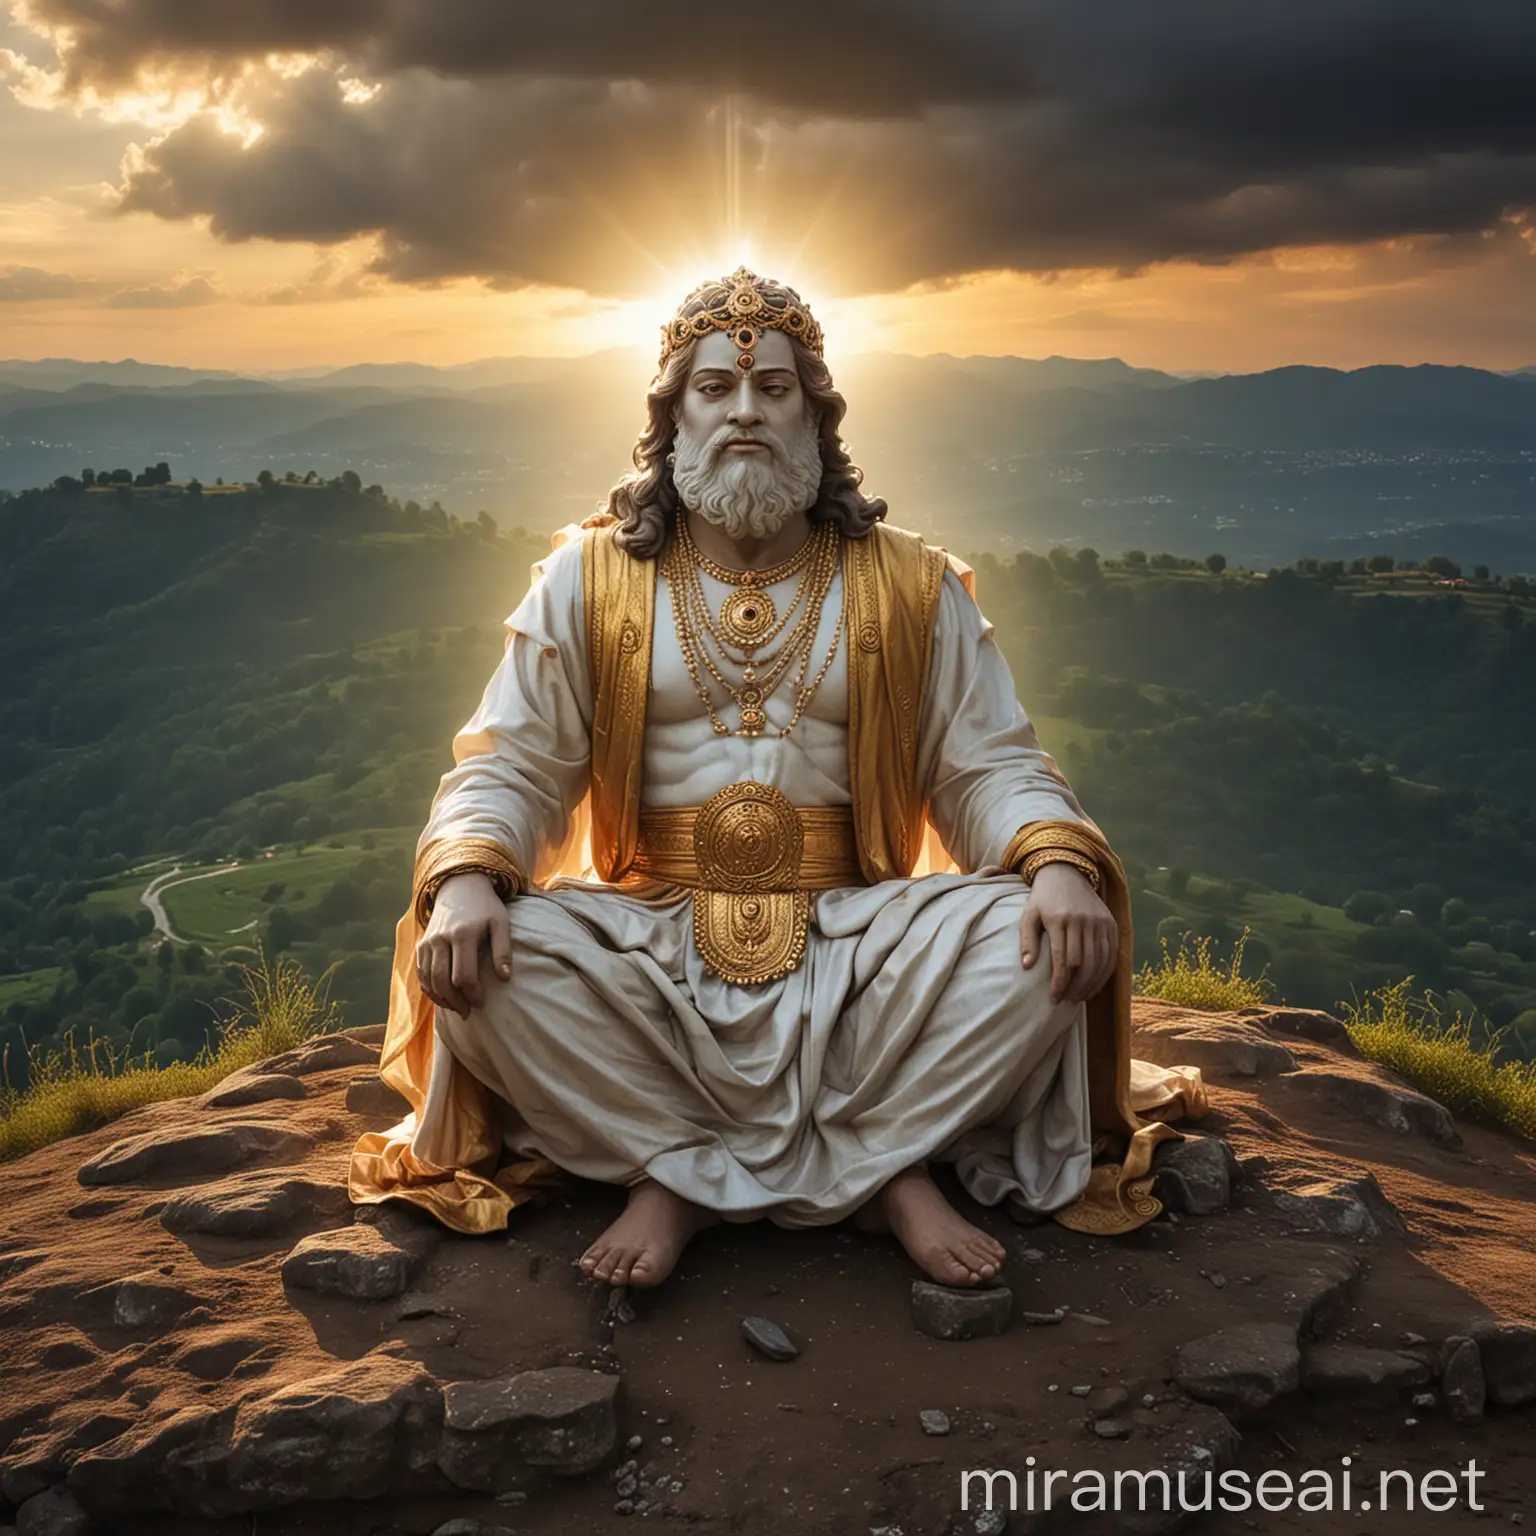 divine god sitting on a hill